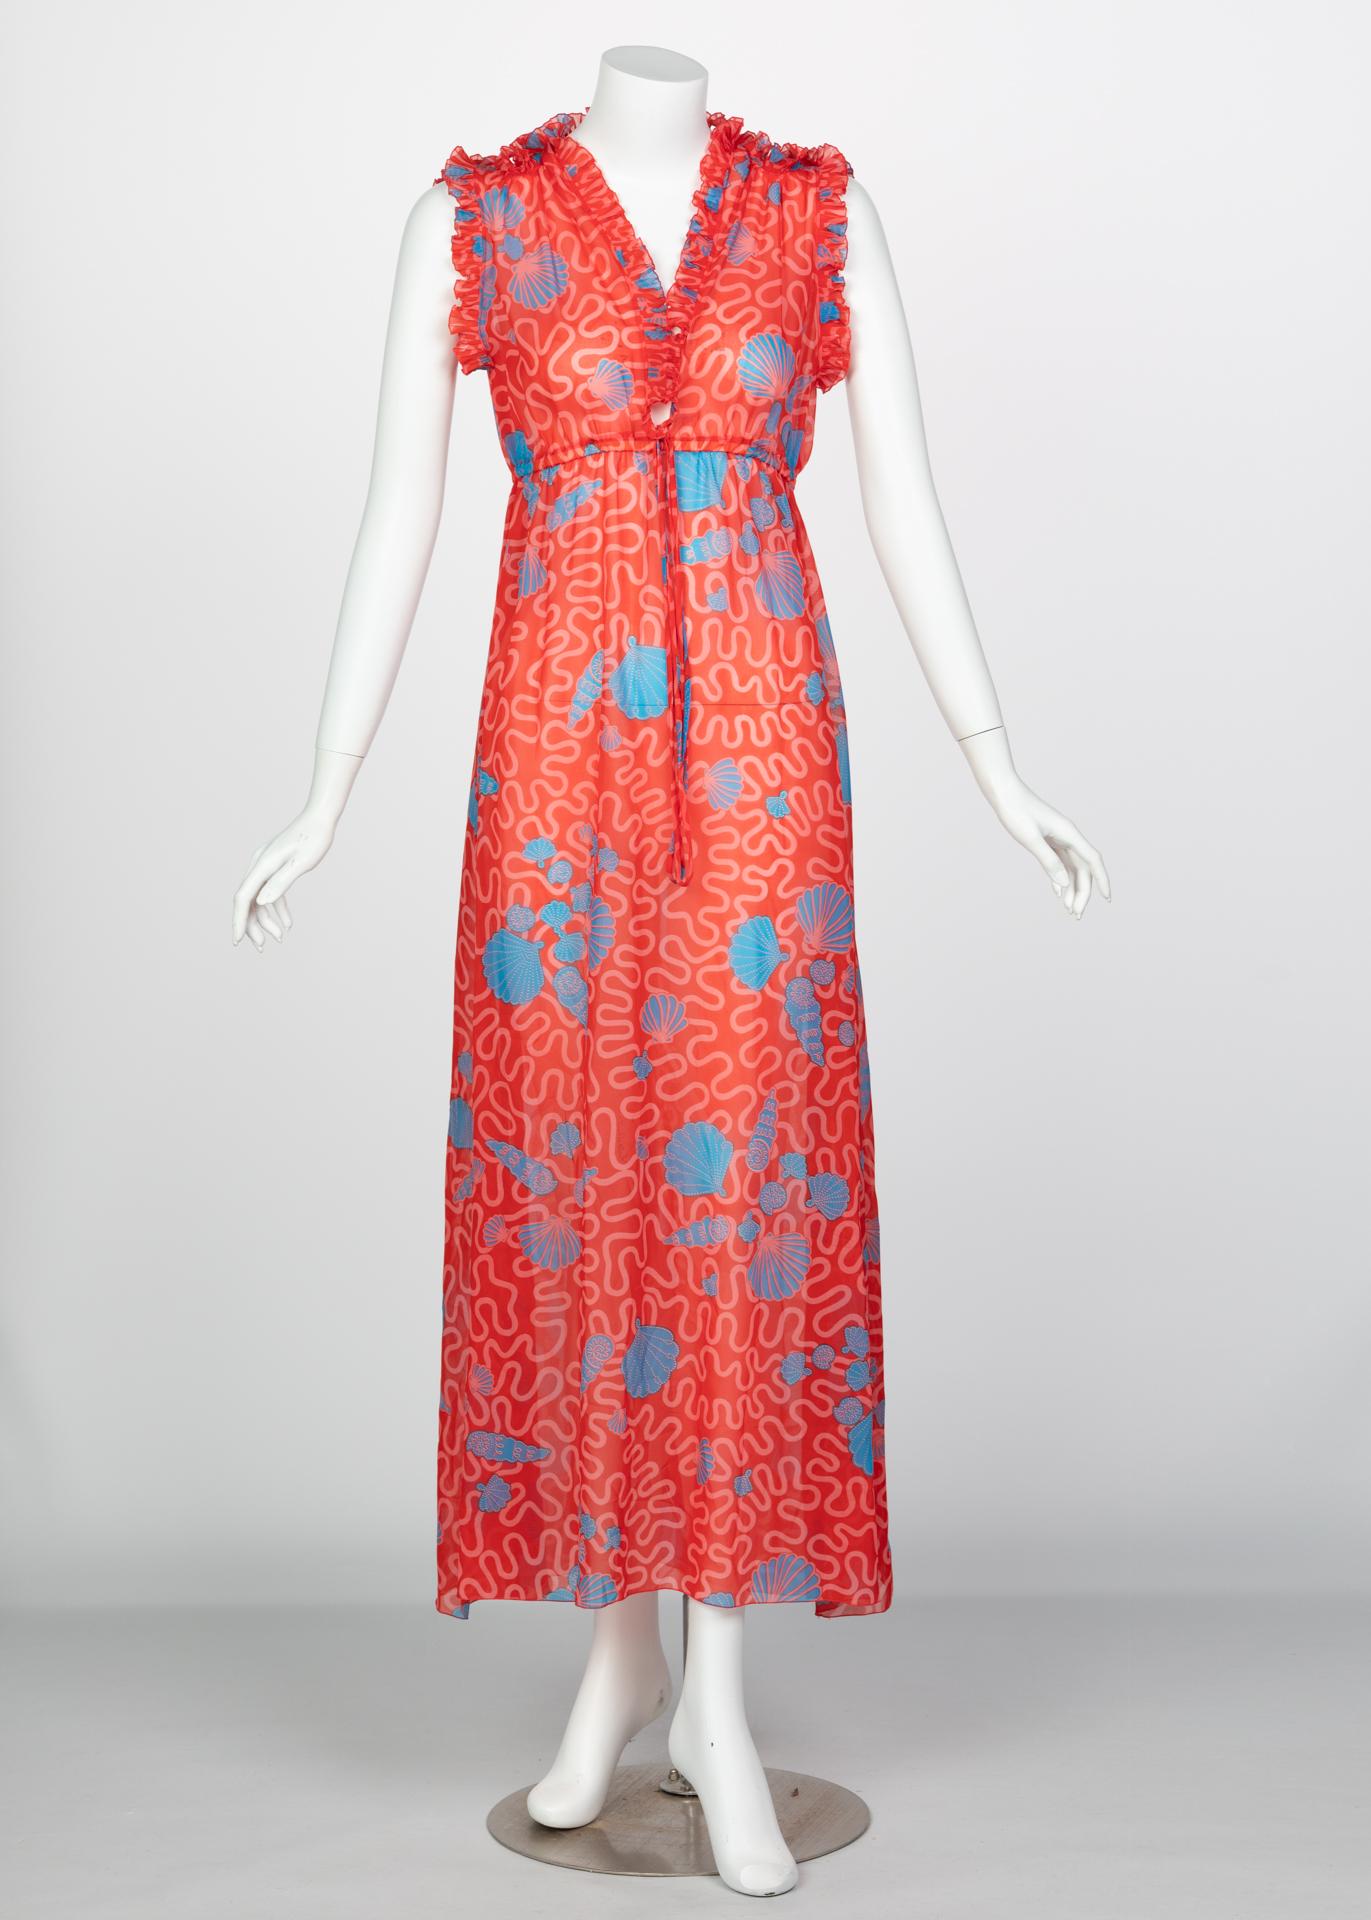 Zandra Rhodes Red Pleated Shell print Caftan and Sleeveless Dress Set, 1970s 3